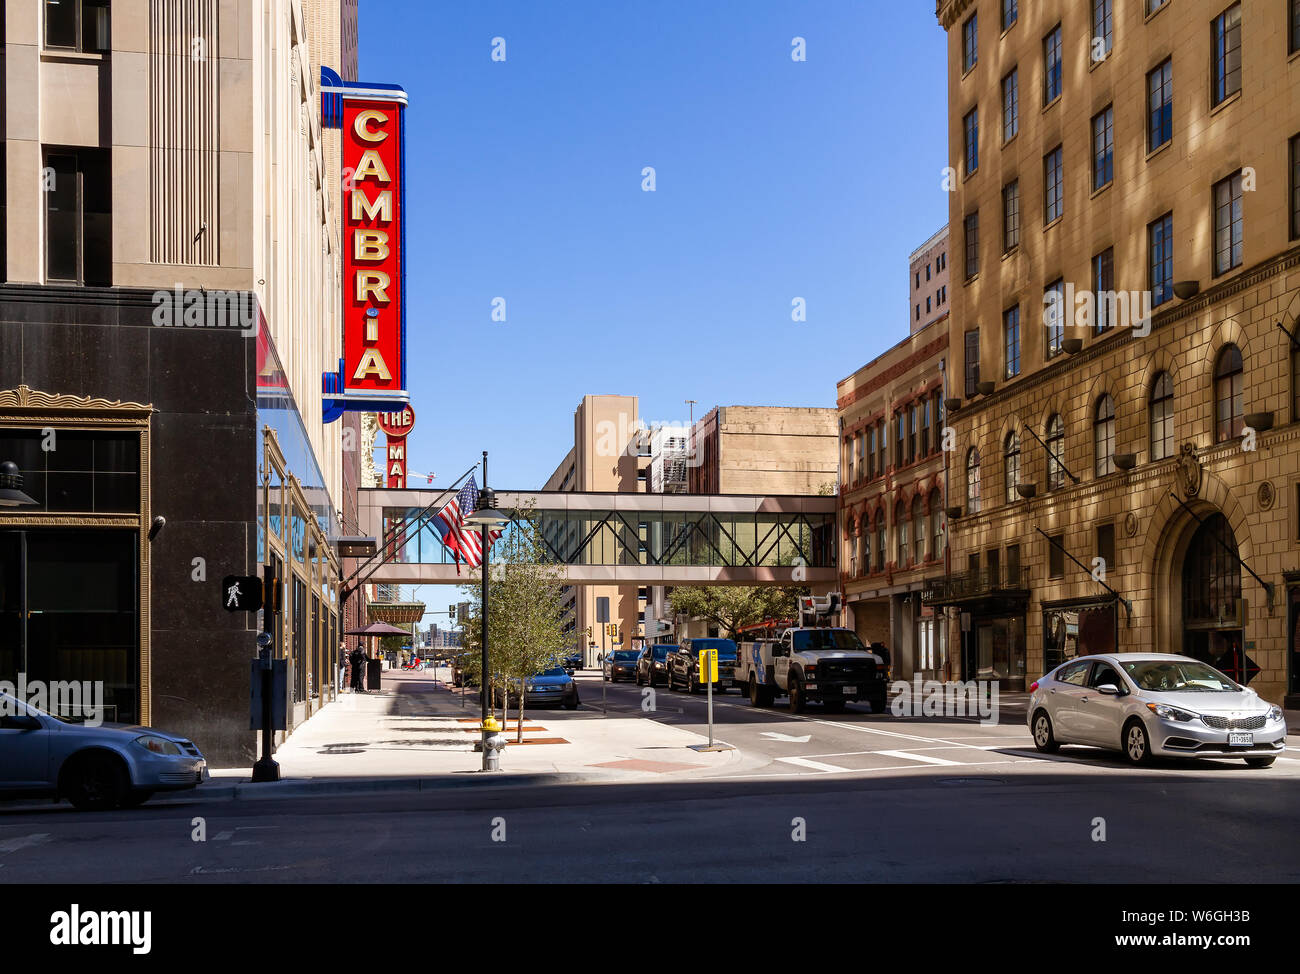 Dallas, TX - March 16, 2019: Historic Majestic Theater located in downtown Dallas. Texas, just beside Cambria Hotel. Stock Photo